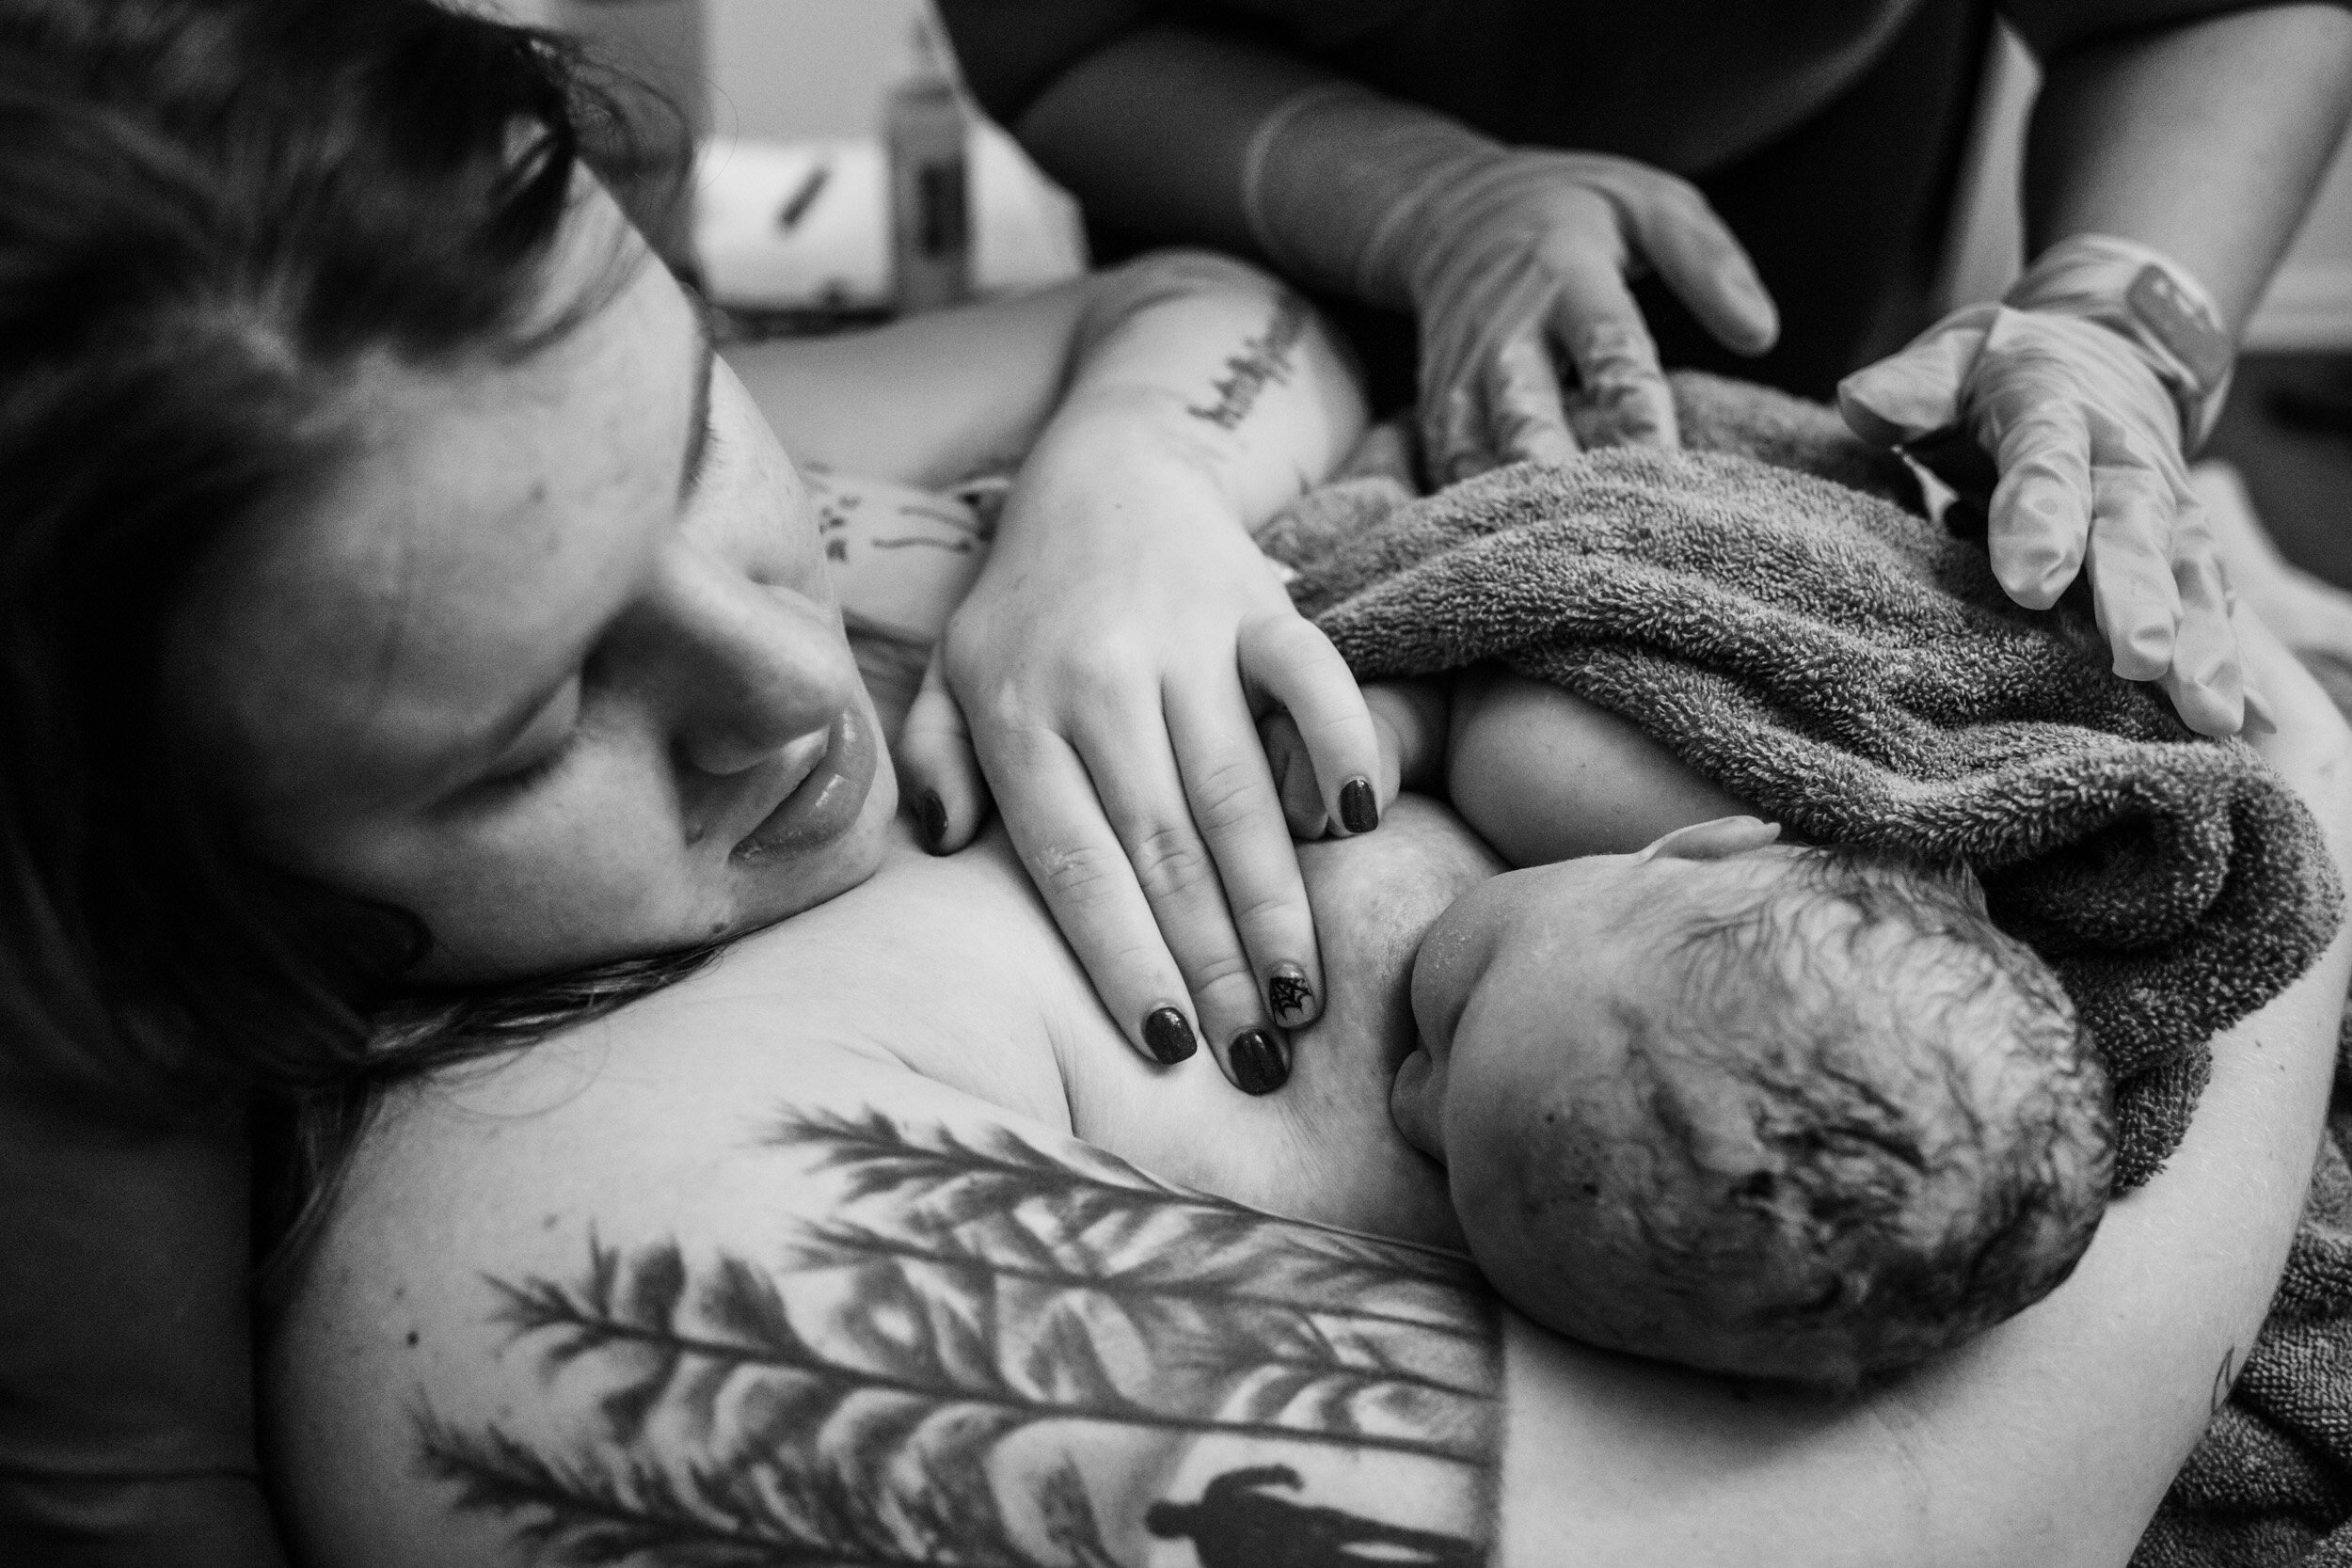 jacksonville mom breastfeeding her baby